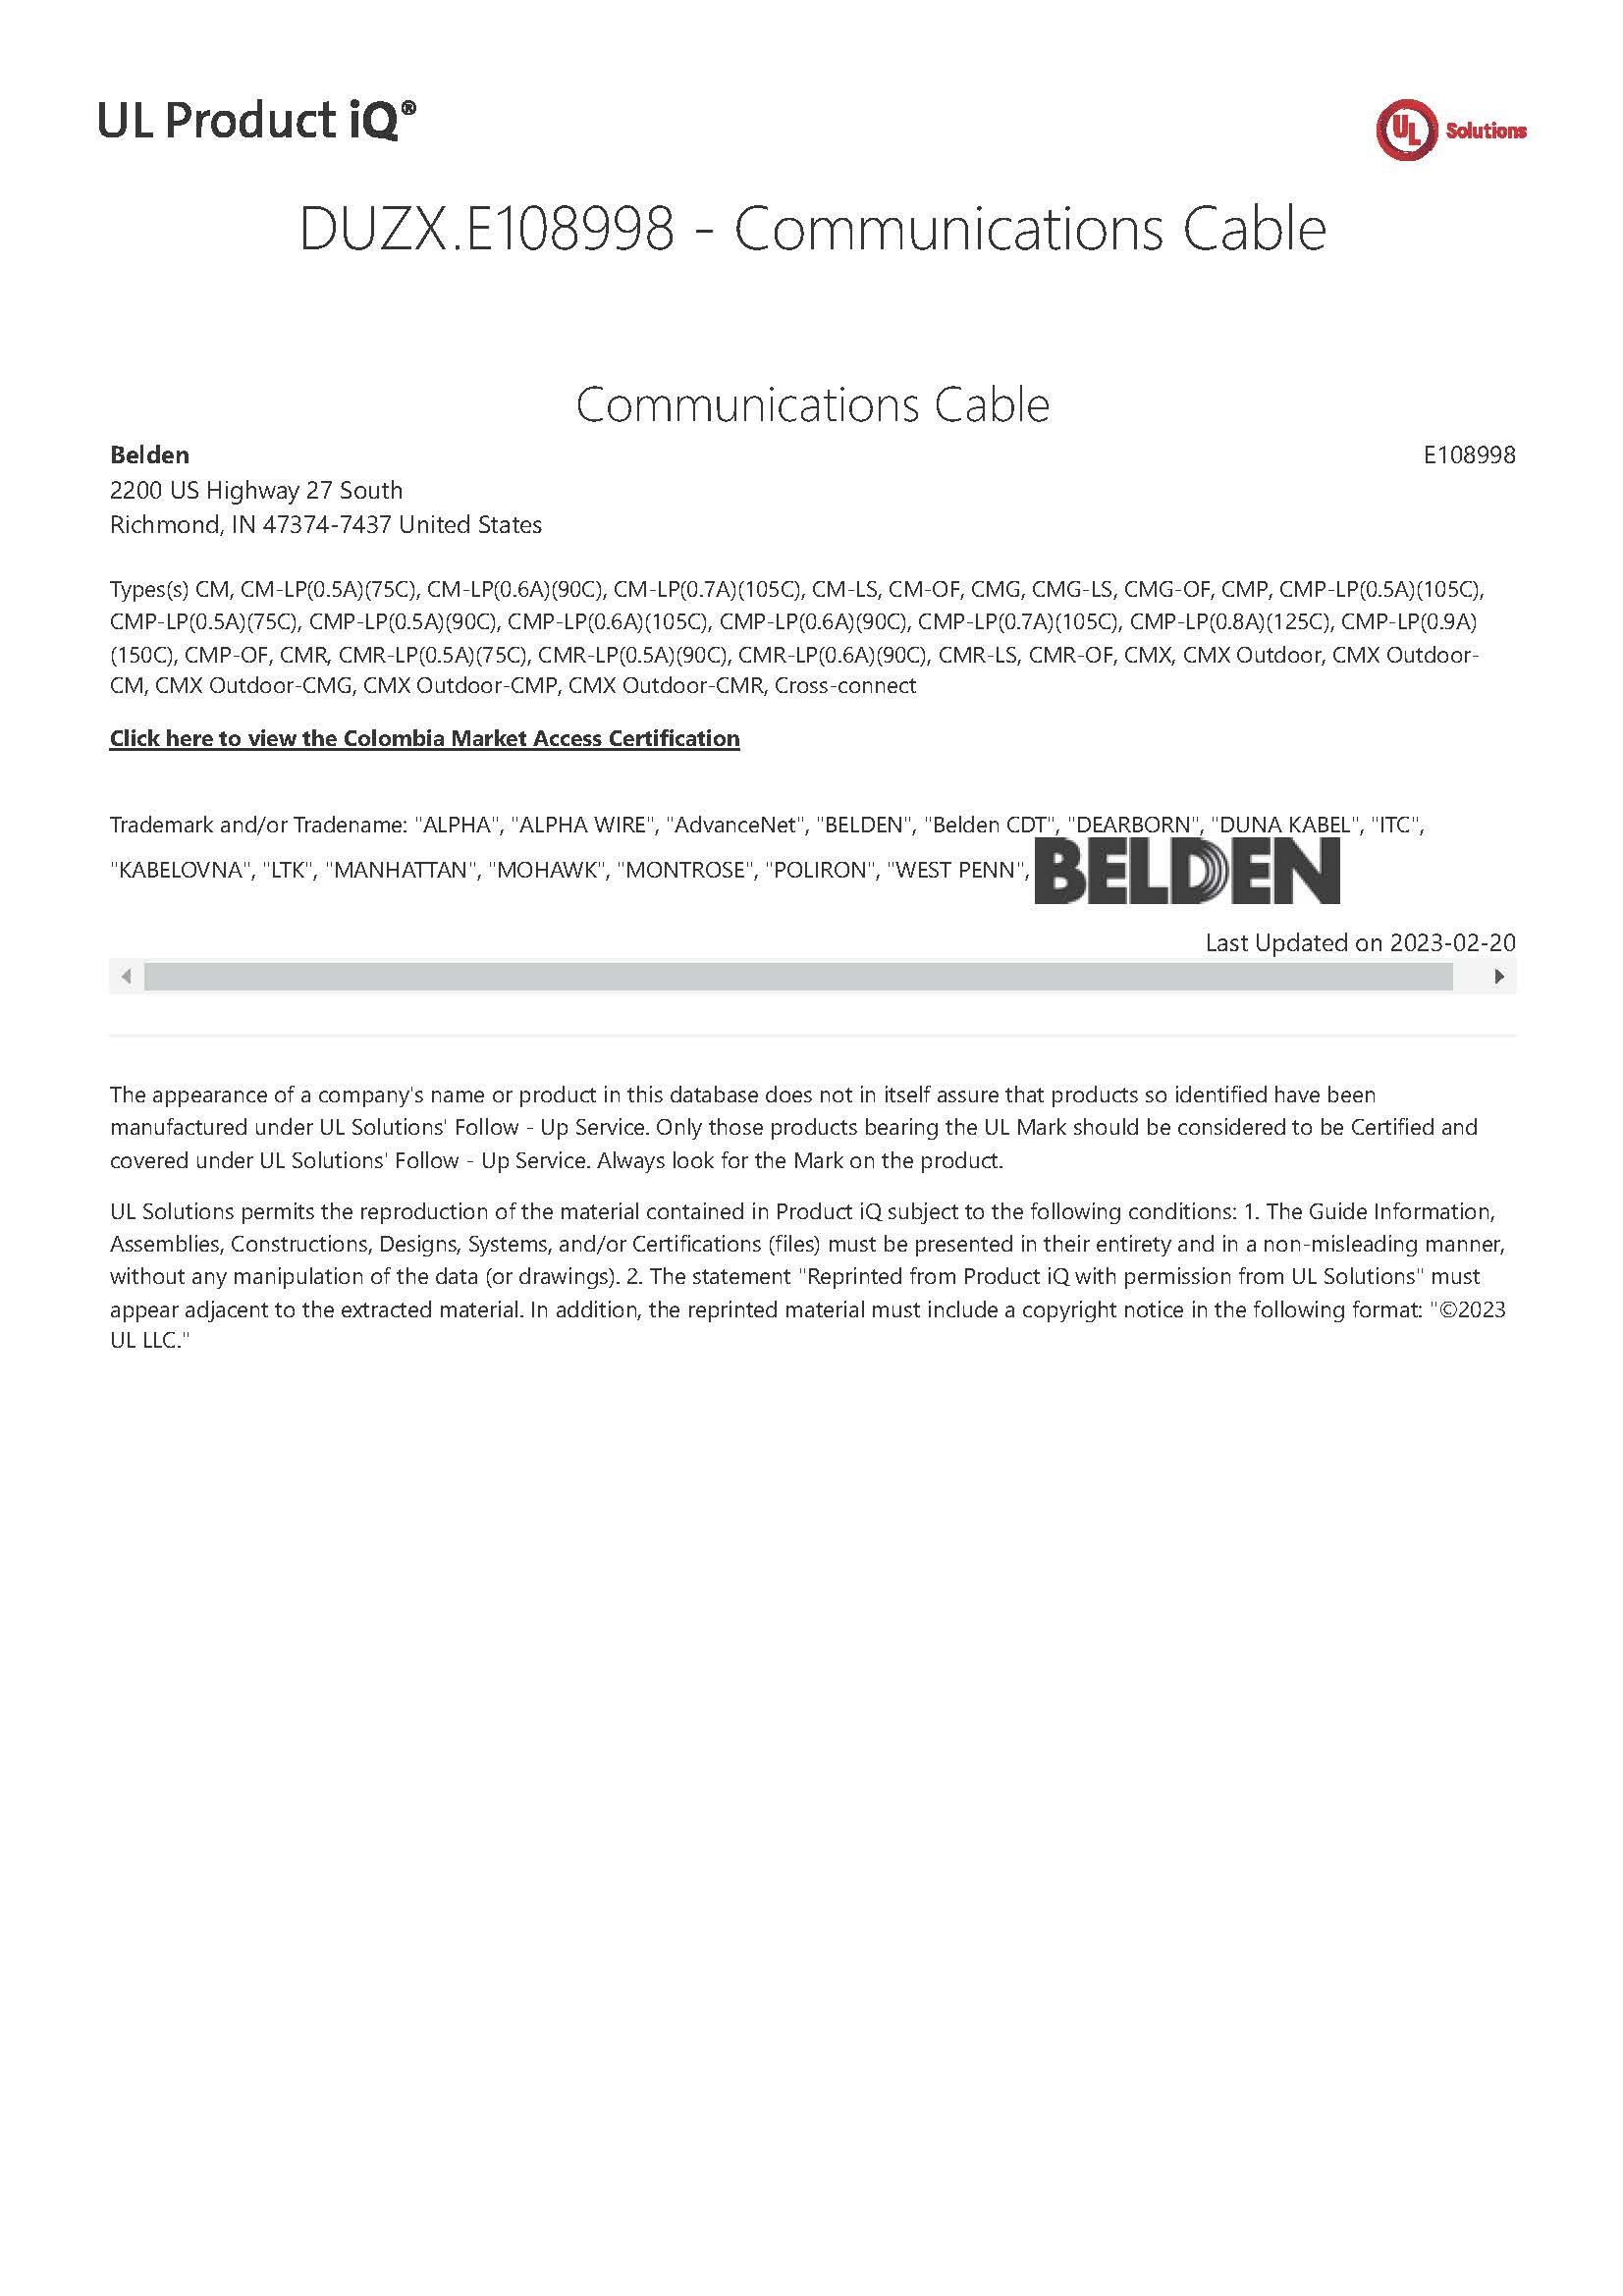 BELDEN UL Certificate (Communication Cable), DUZX.E108998